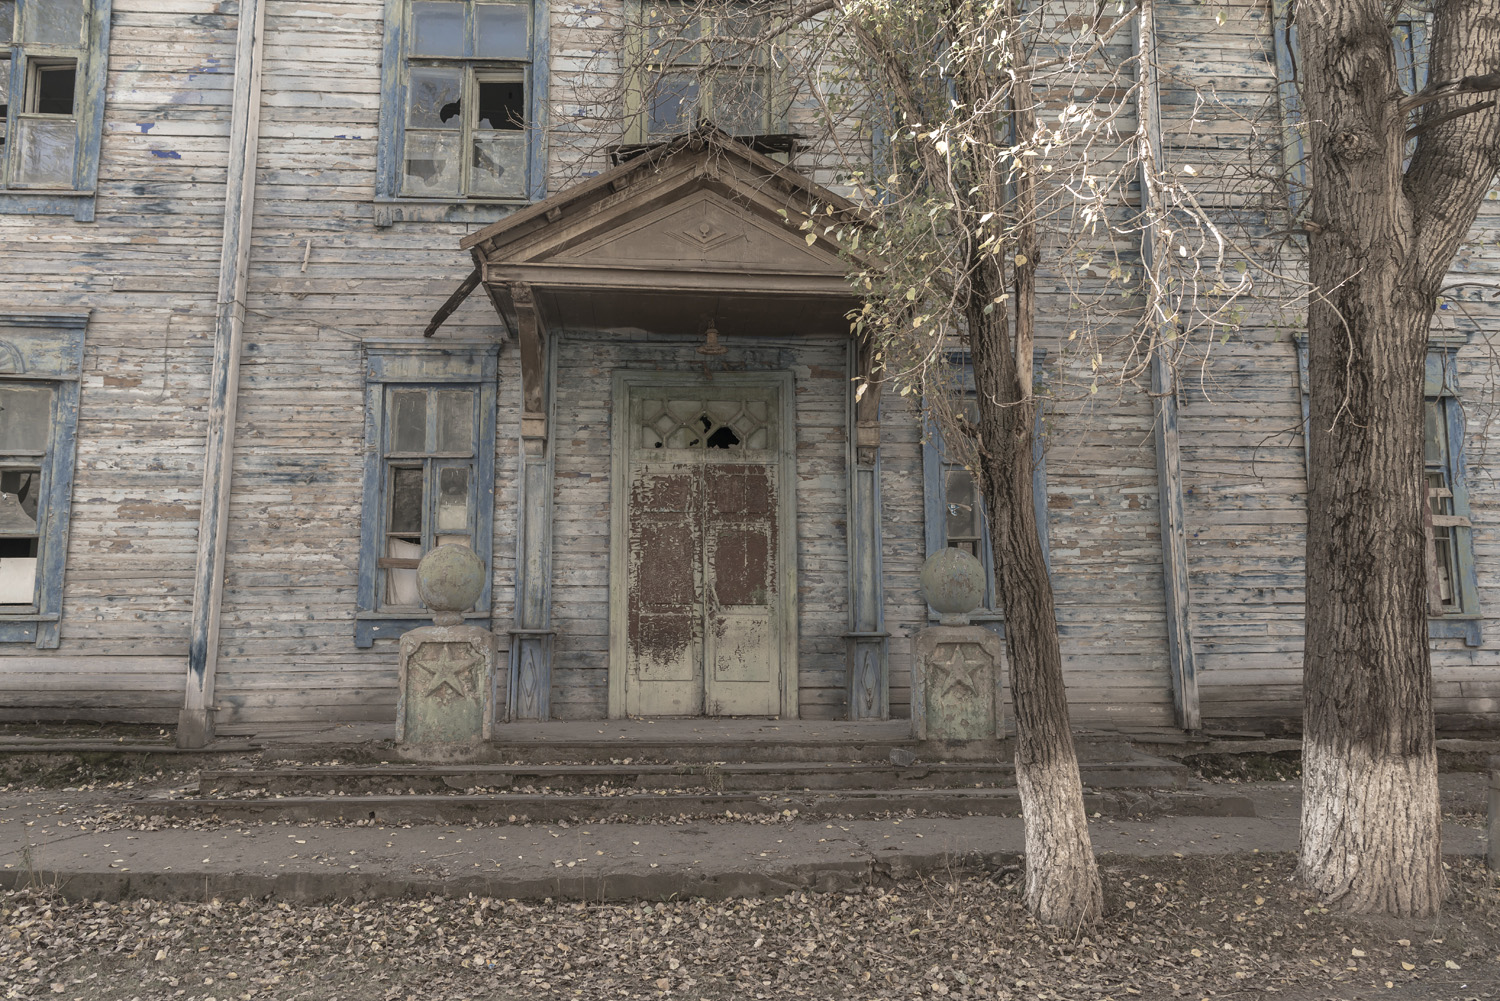 min-kush-soviet-uranium-mining-town-industrial-Russia-Kyrgyzstan-ruins-soviet-sign-jo-kearney-photos-video-photography.abandoned-buildings-abandonment-depressed.jpg